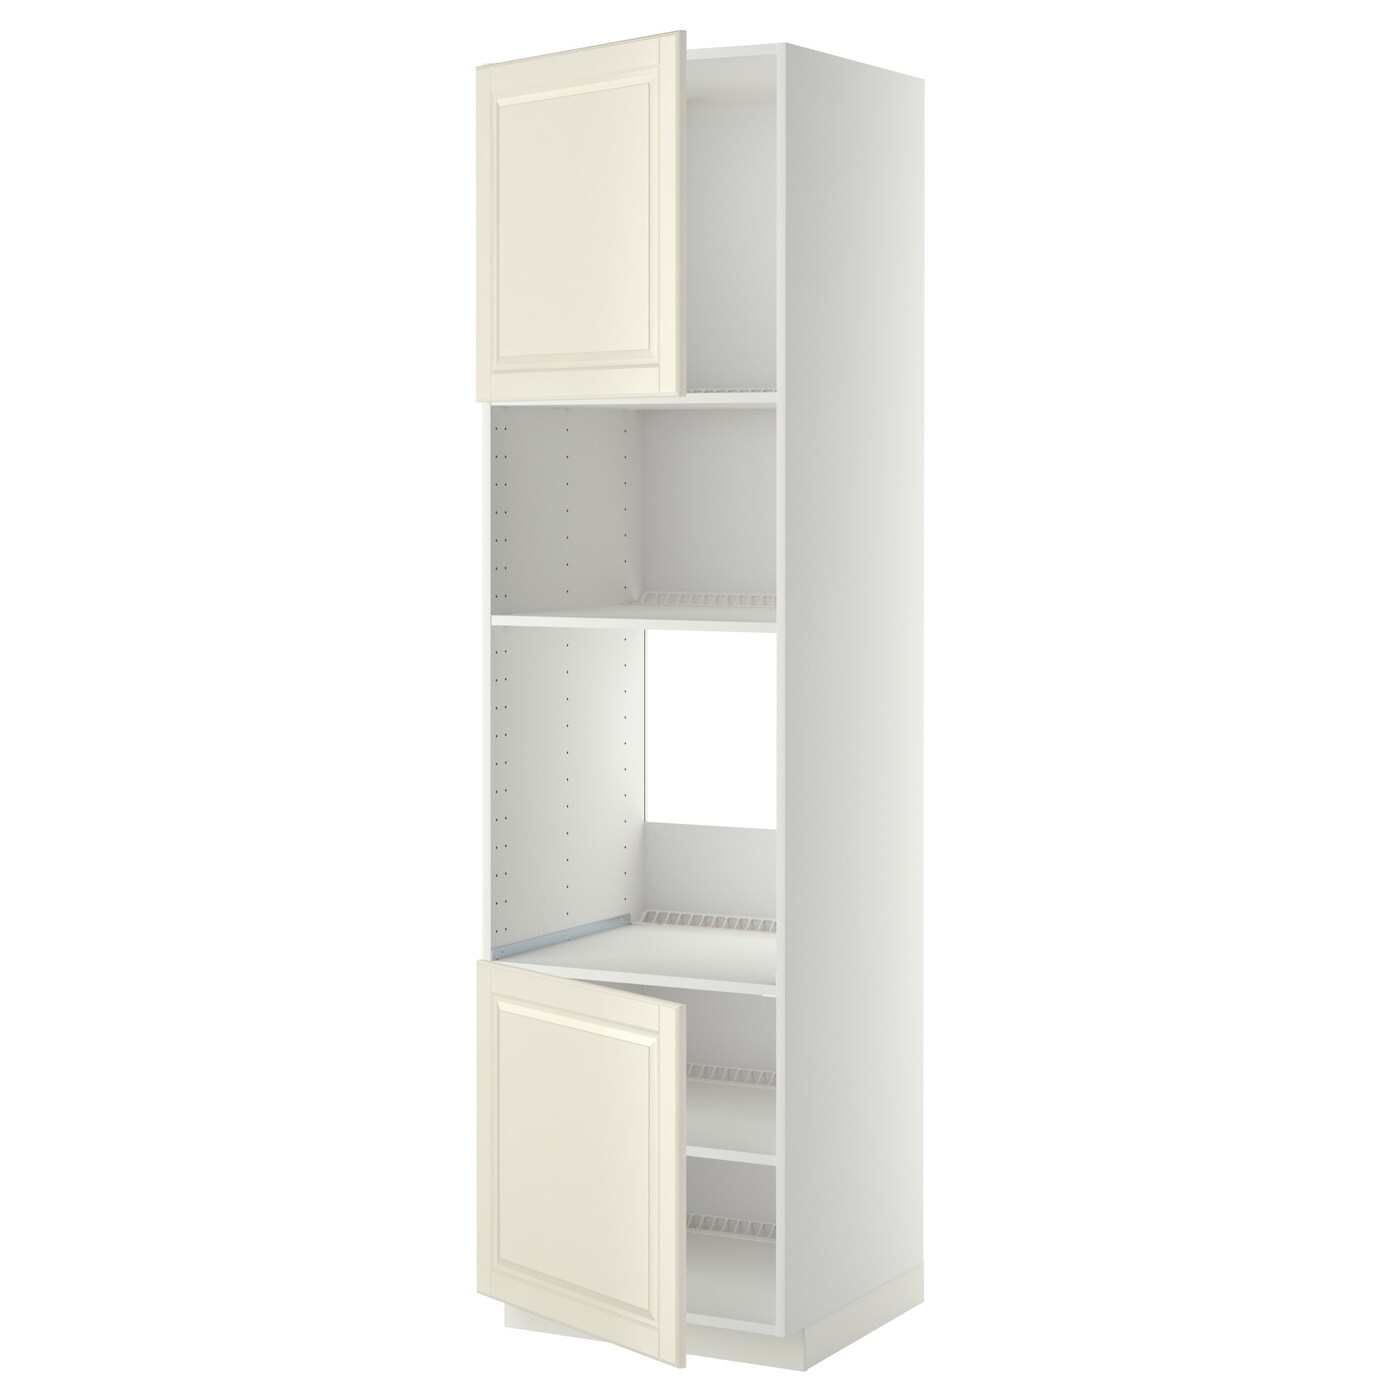 Кухонный шкаф-пенал - IKEA METOD/МЕТОД ИКЕА, 220х60х60 см, белый/кремовый